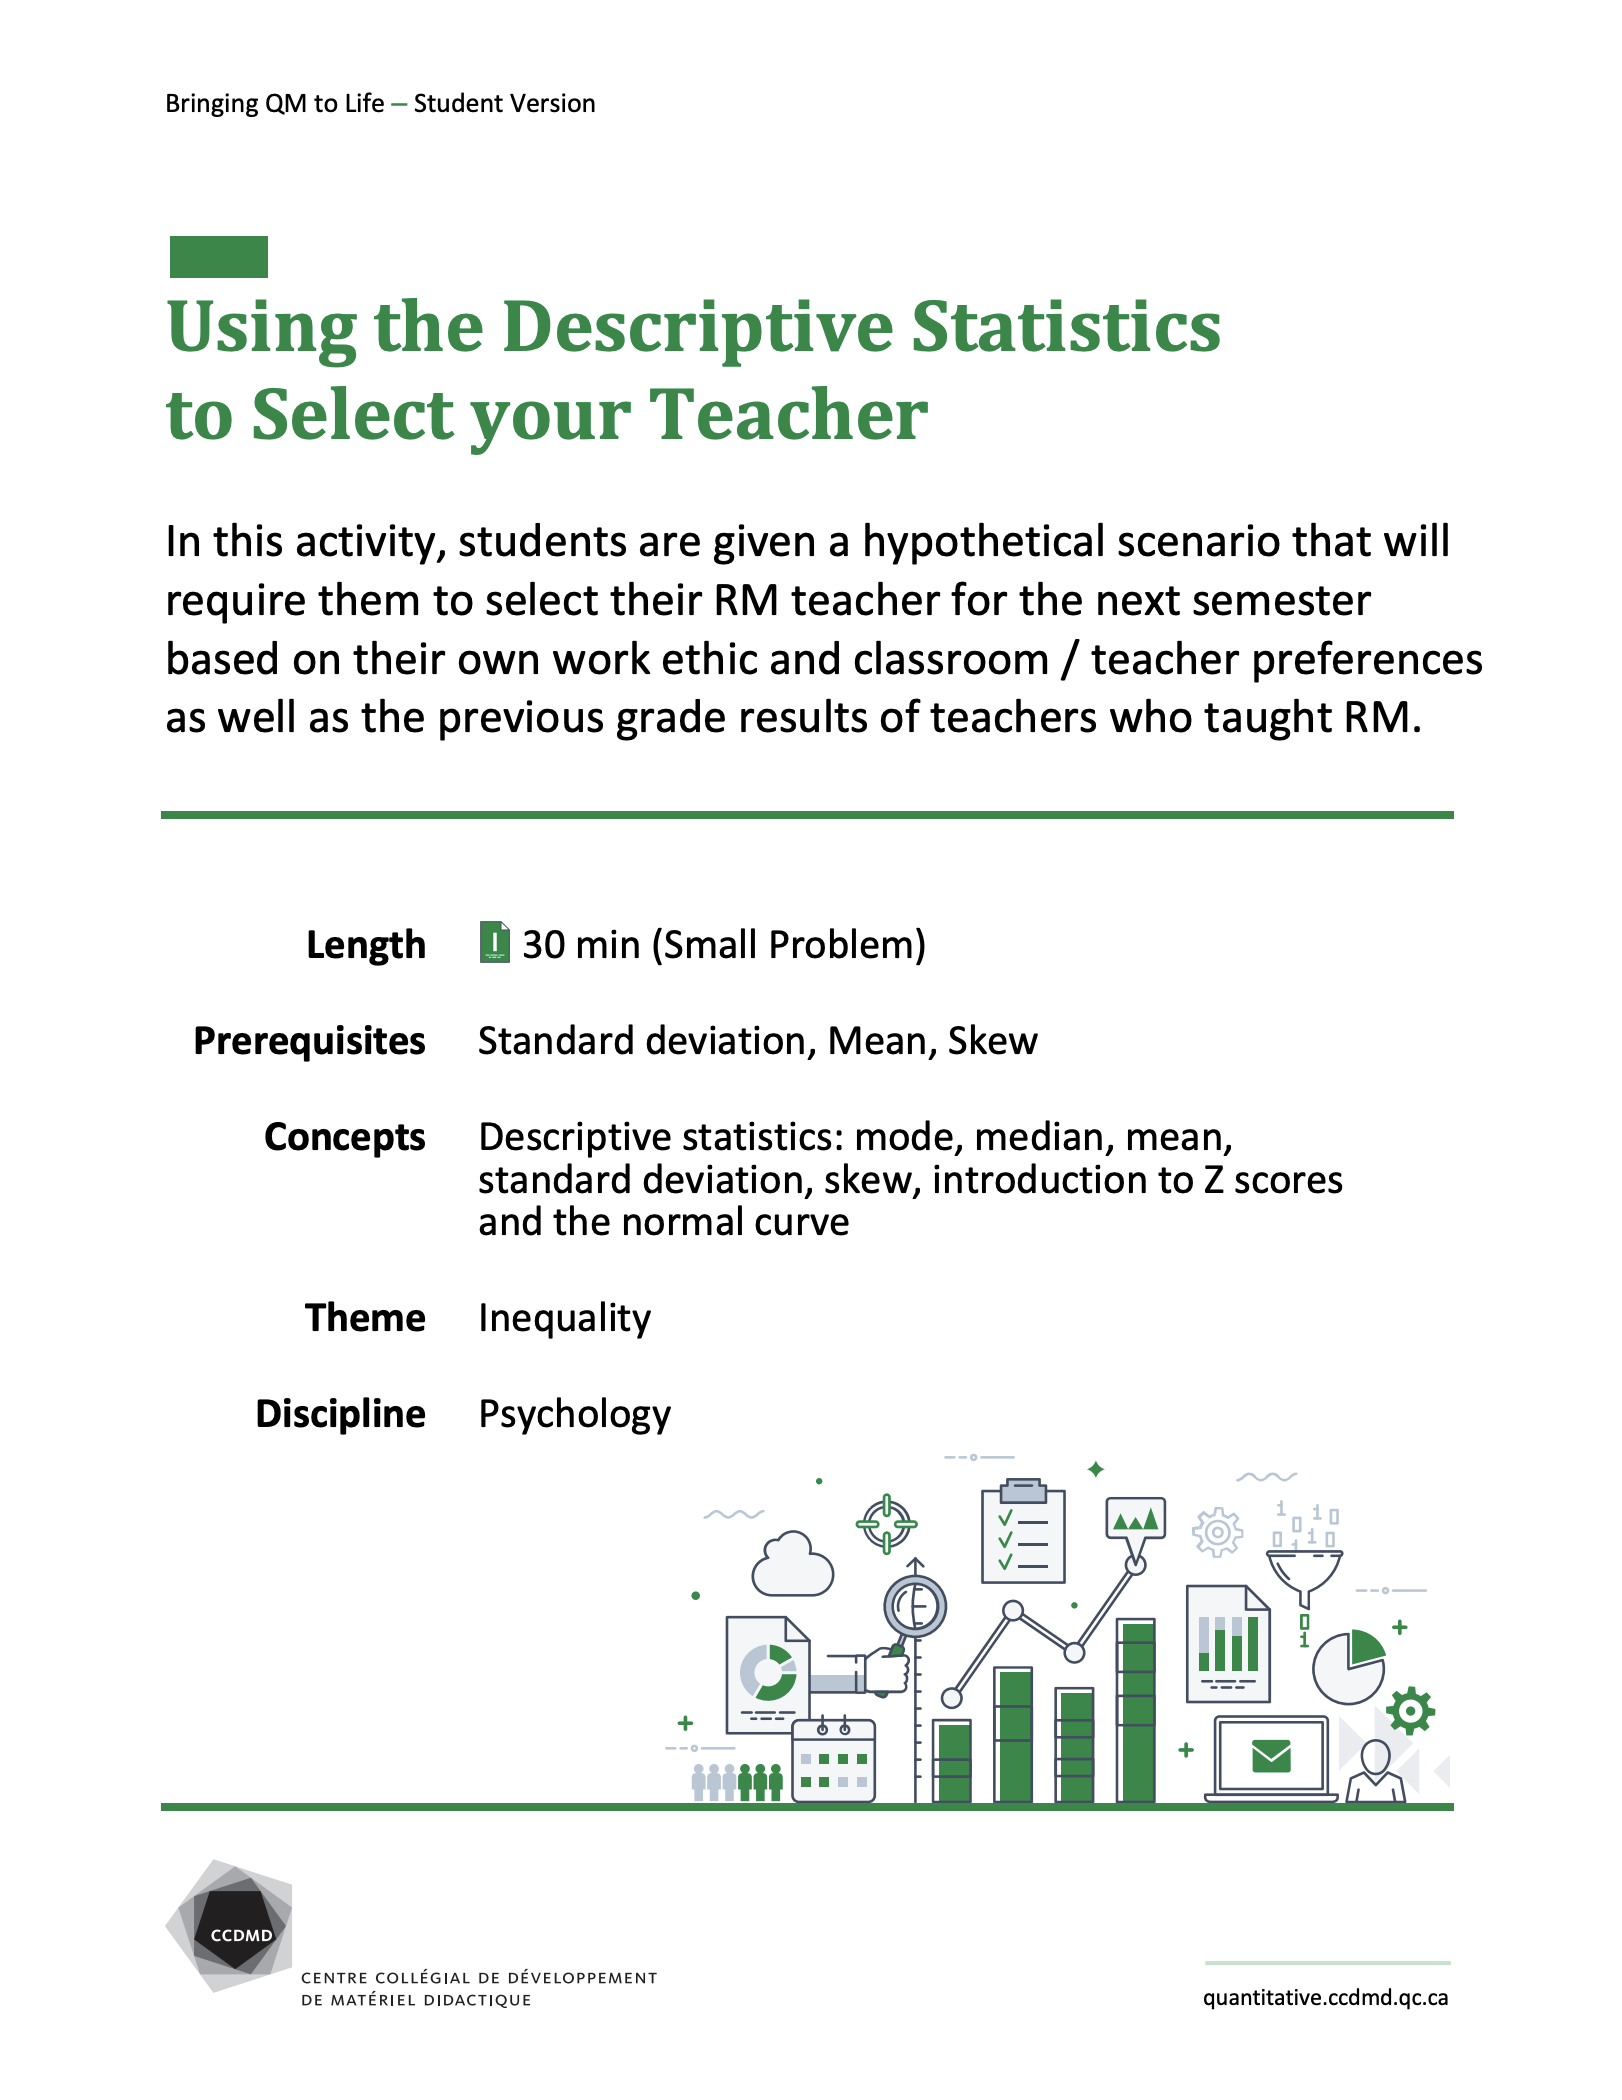 Using the Descriptive Statistics to Select your Teacher